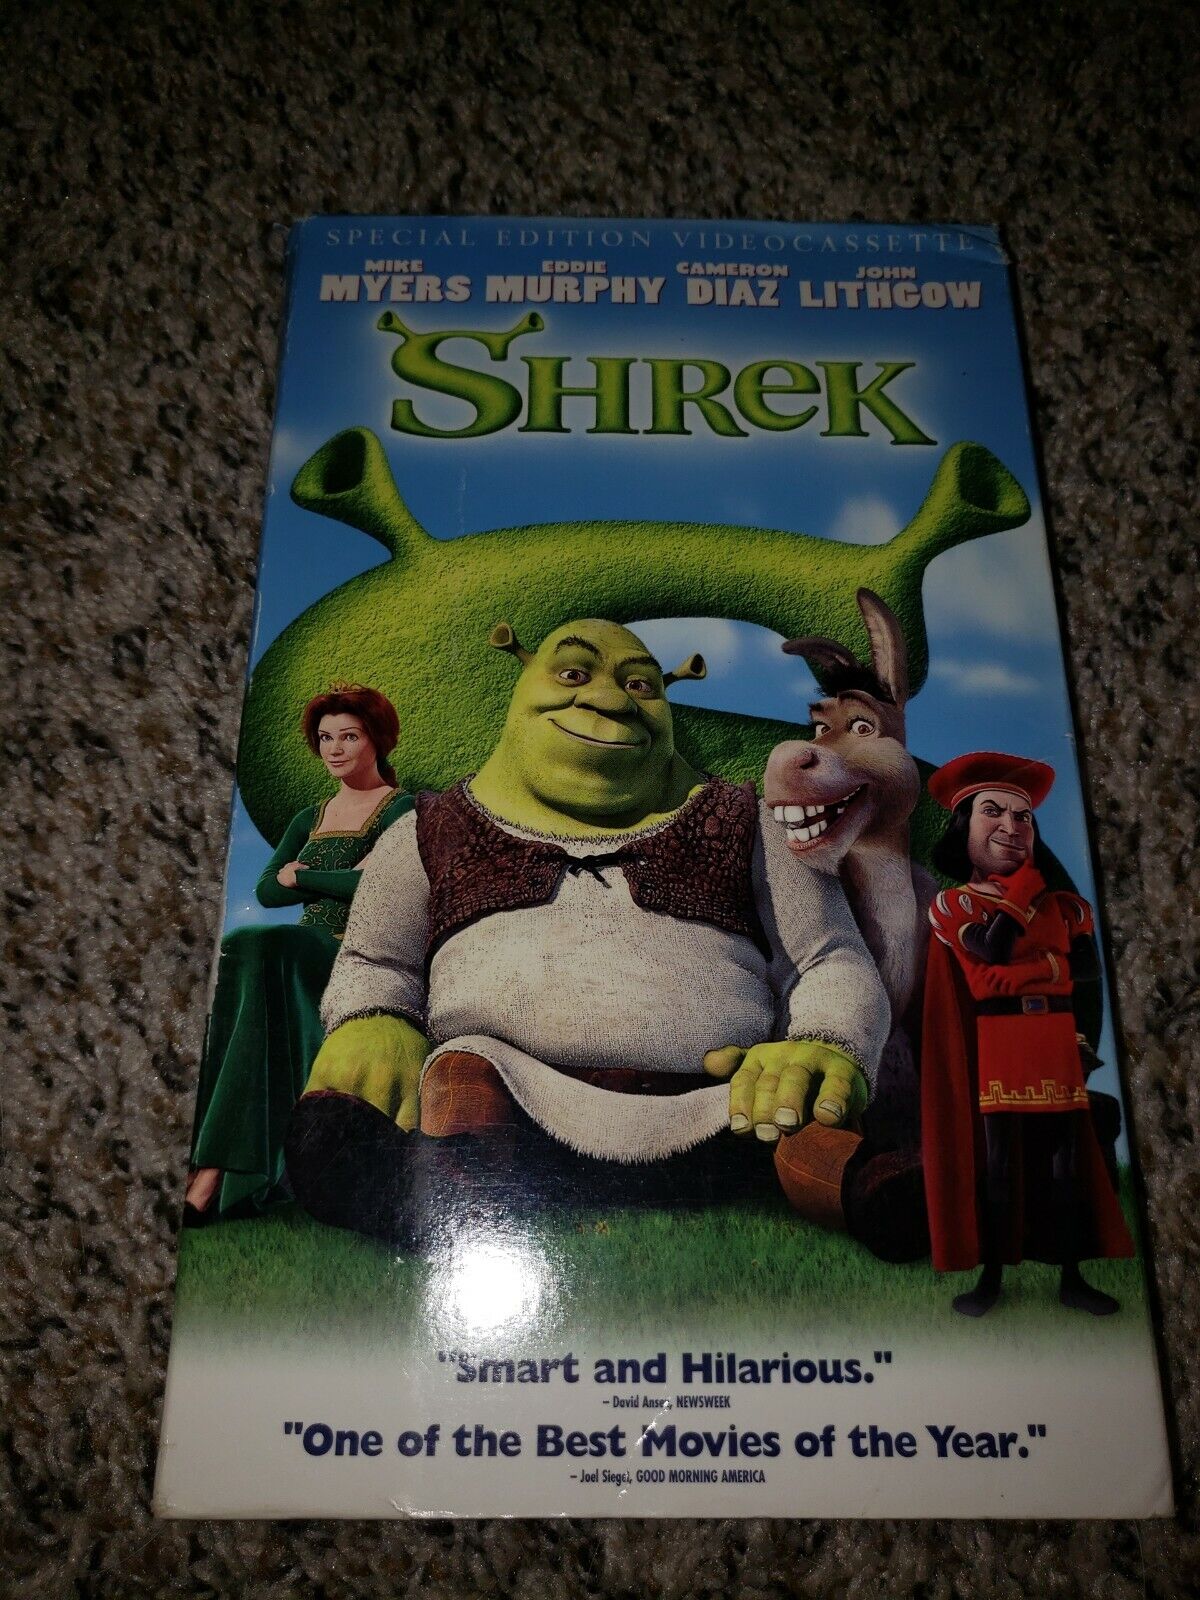 Shrek VHS 2001 Special Edition (VHS) Very Good Family Movie - Funny!  667068367034 | eBay